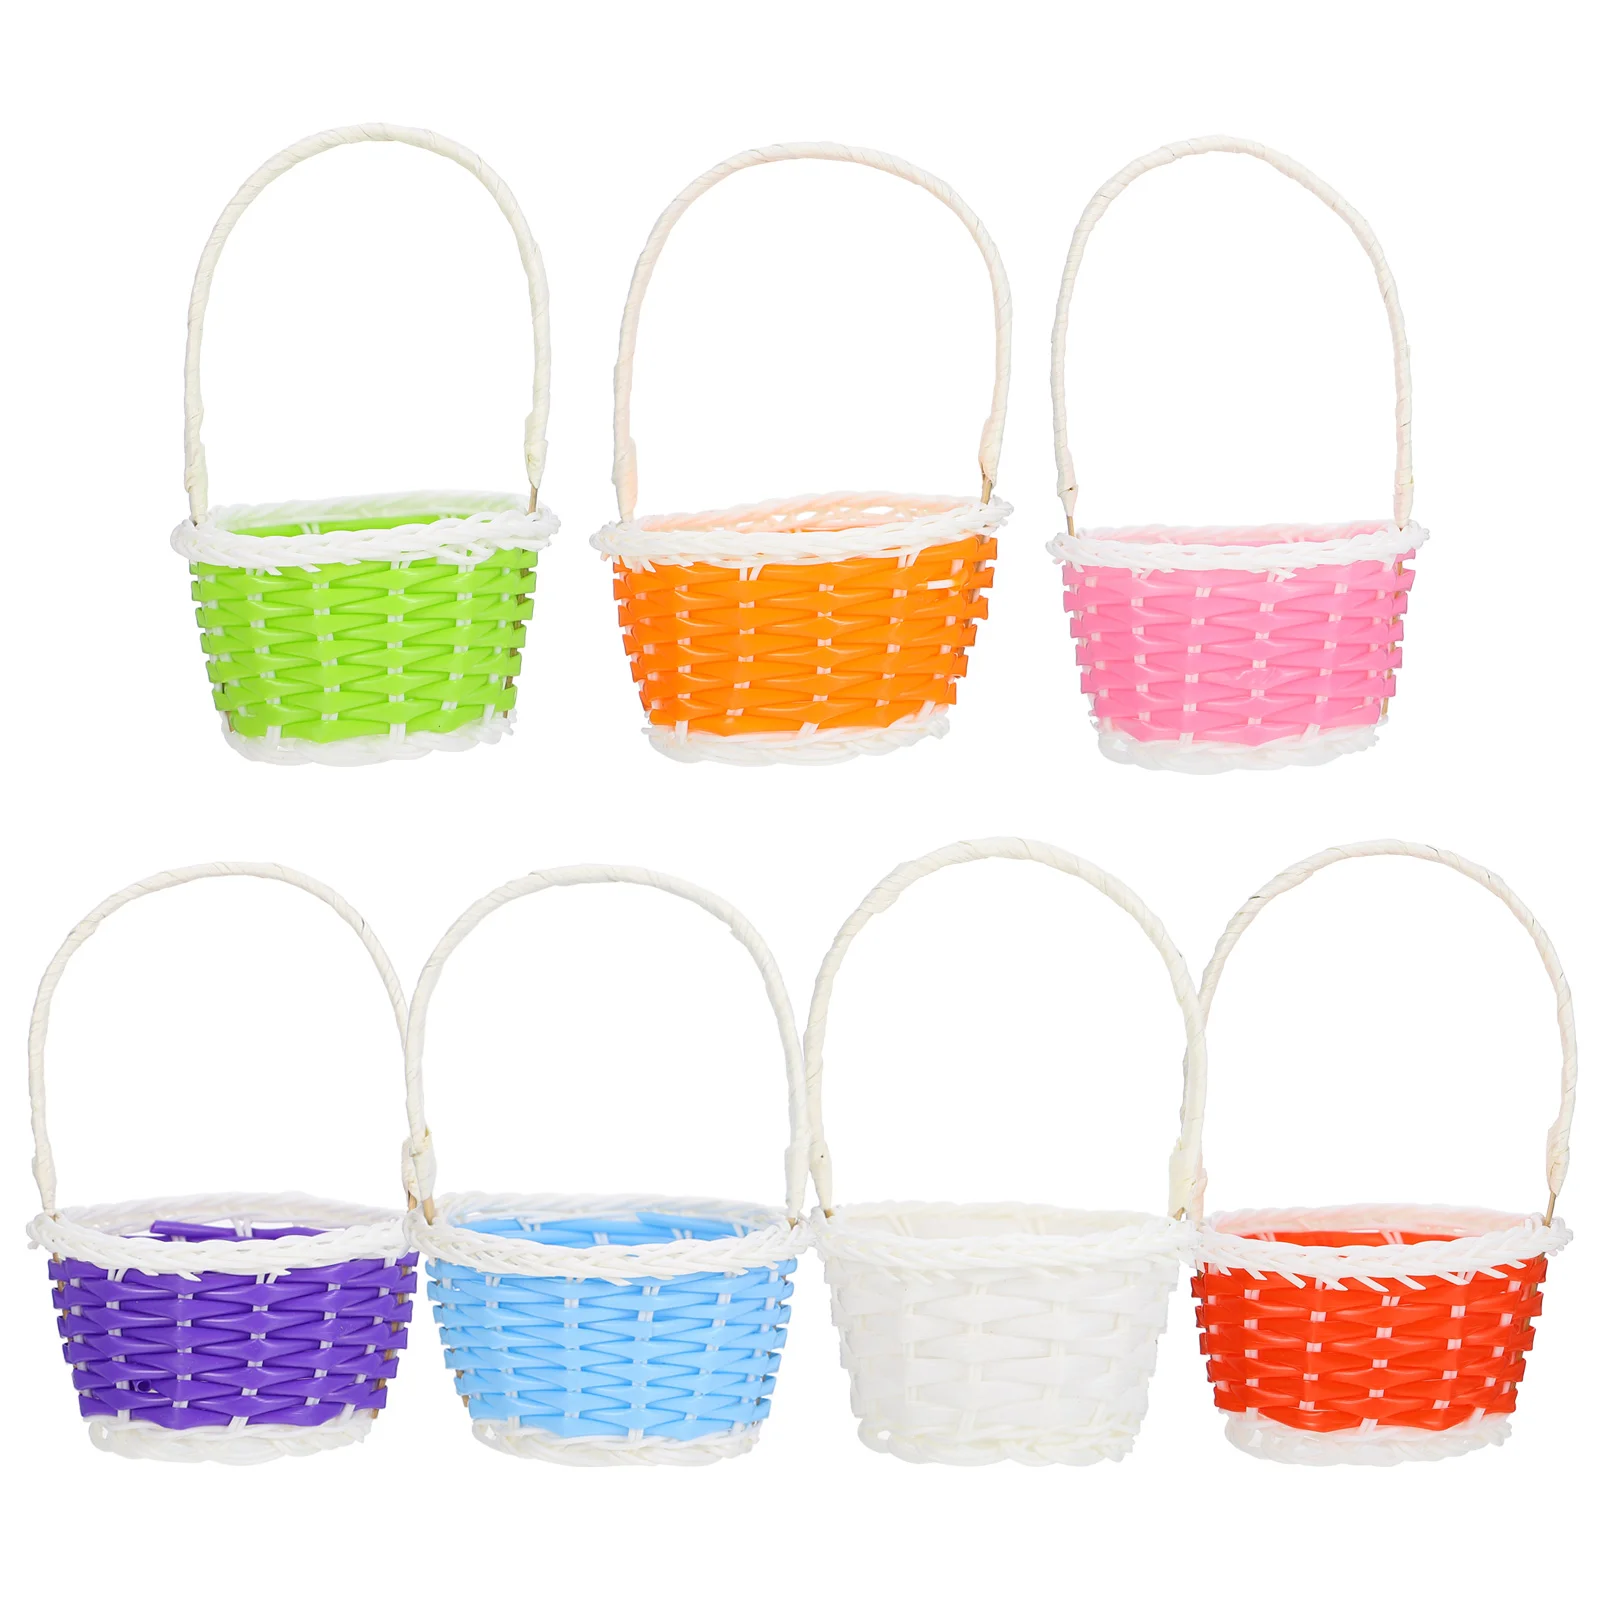 7 Pcs Easter Egg Basket Plastic Craft Baskets Decoration Props Flower Containers Fruit Practical Storage Holders